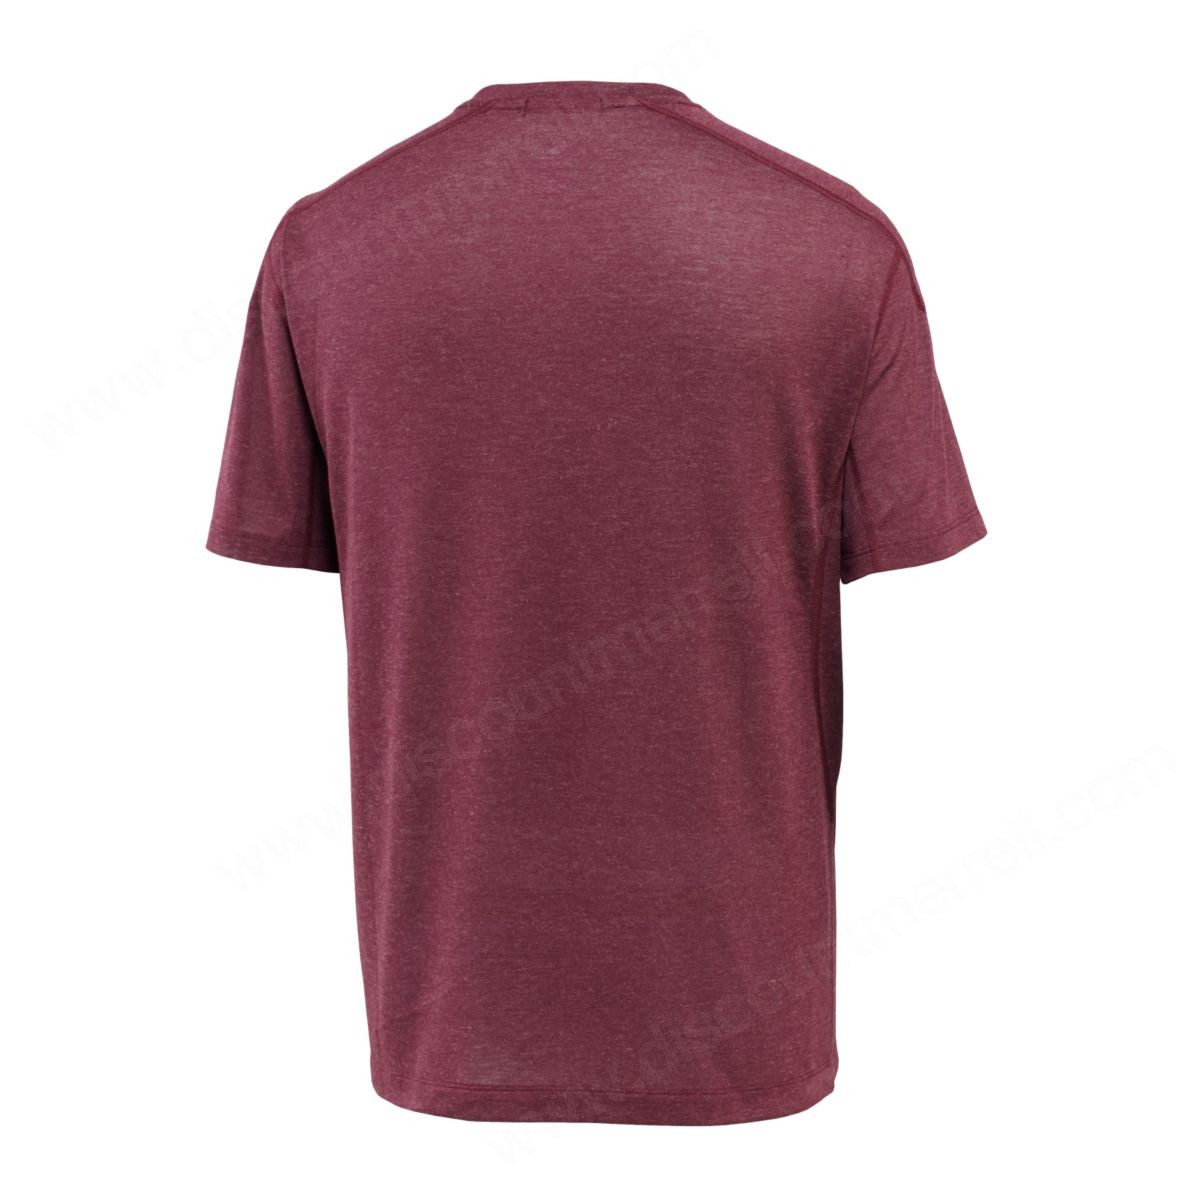 Merrell Mens's Paradox Short Sleeve Tech Tshirt With Drirelease® Fabric Wine-Tasting - -1